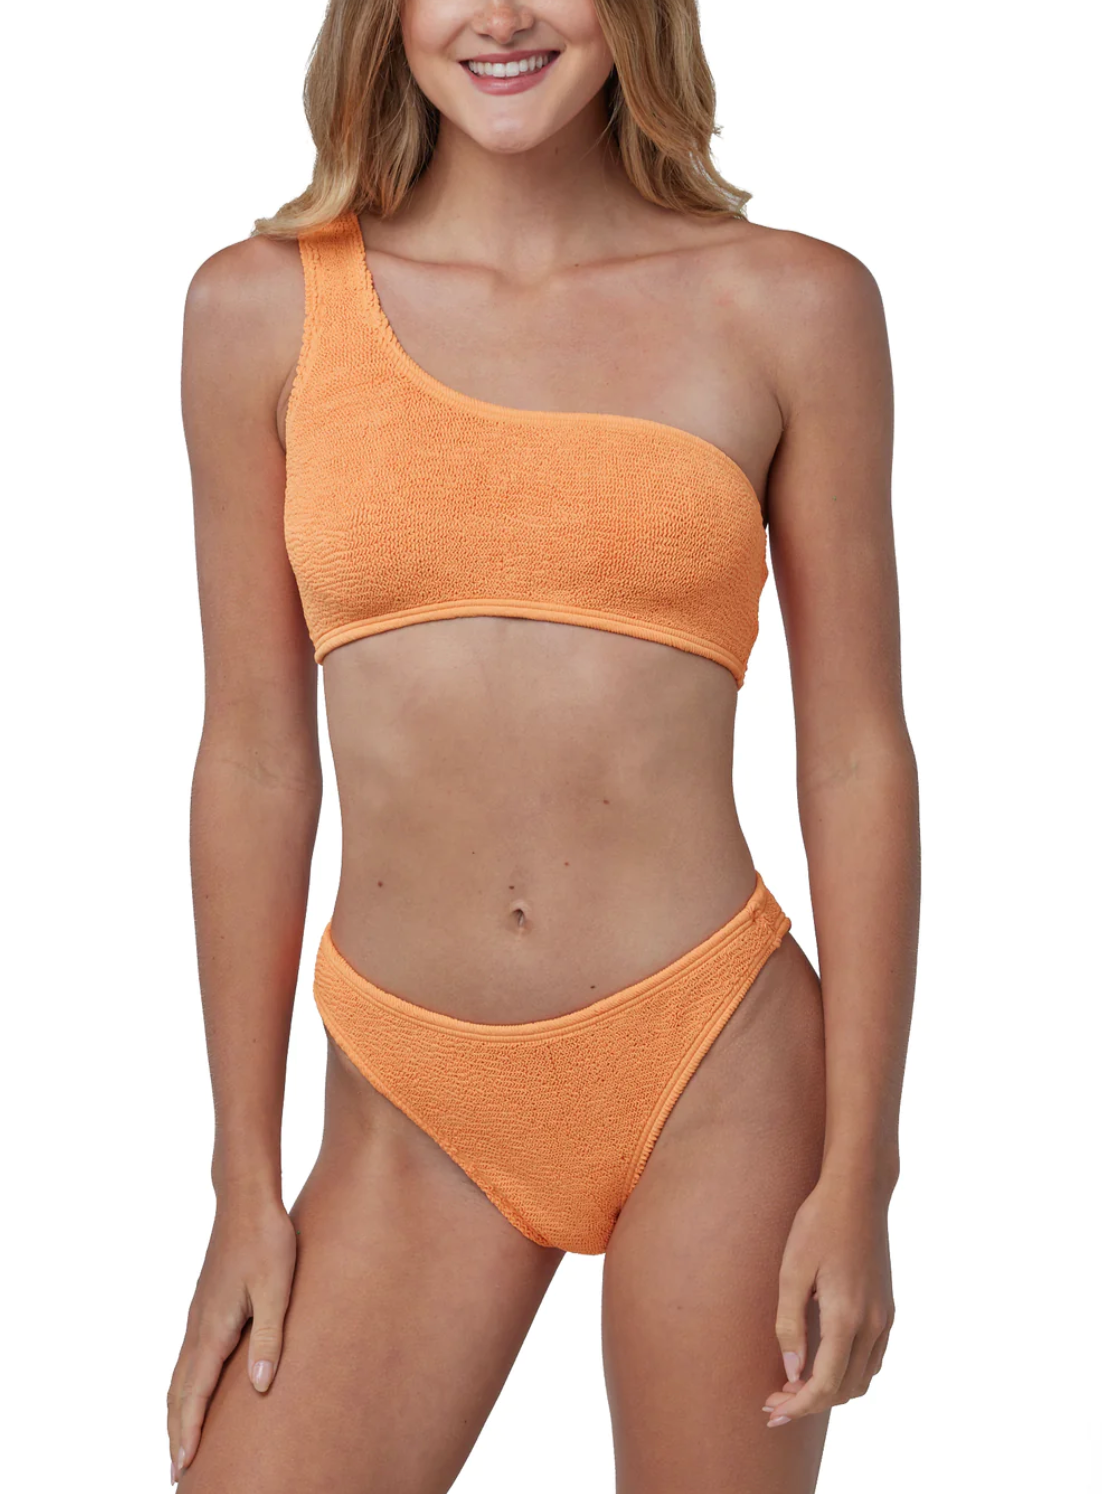 Bora Bora One Shoulder One Size Bikini Top Only